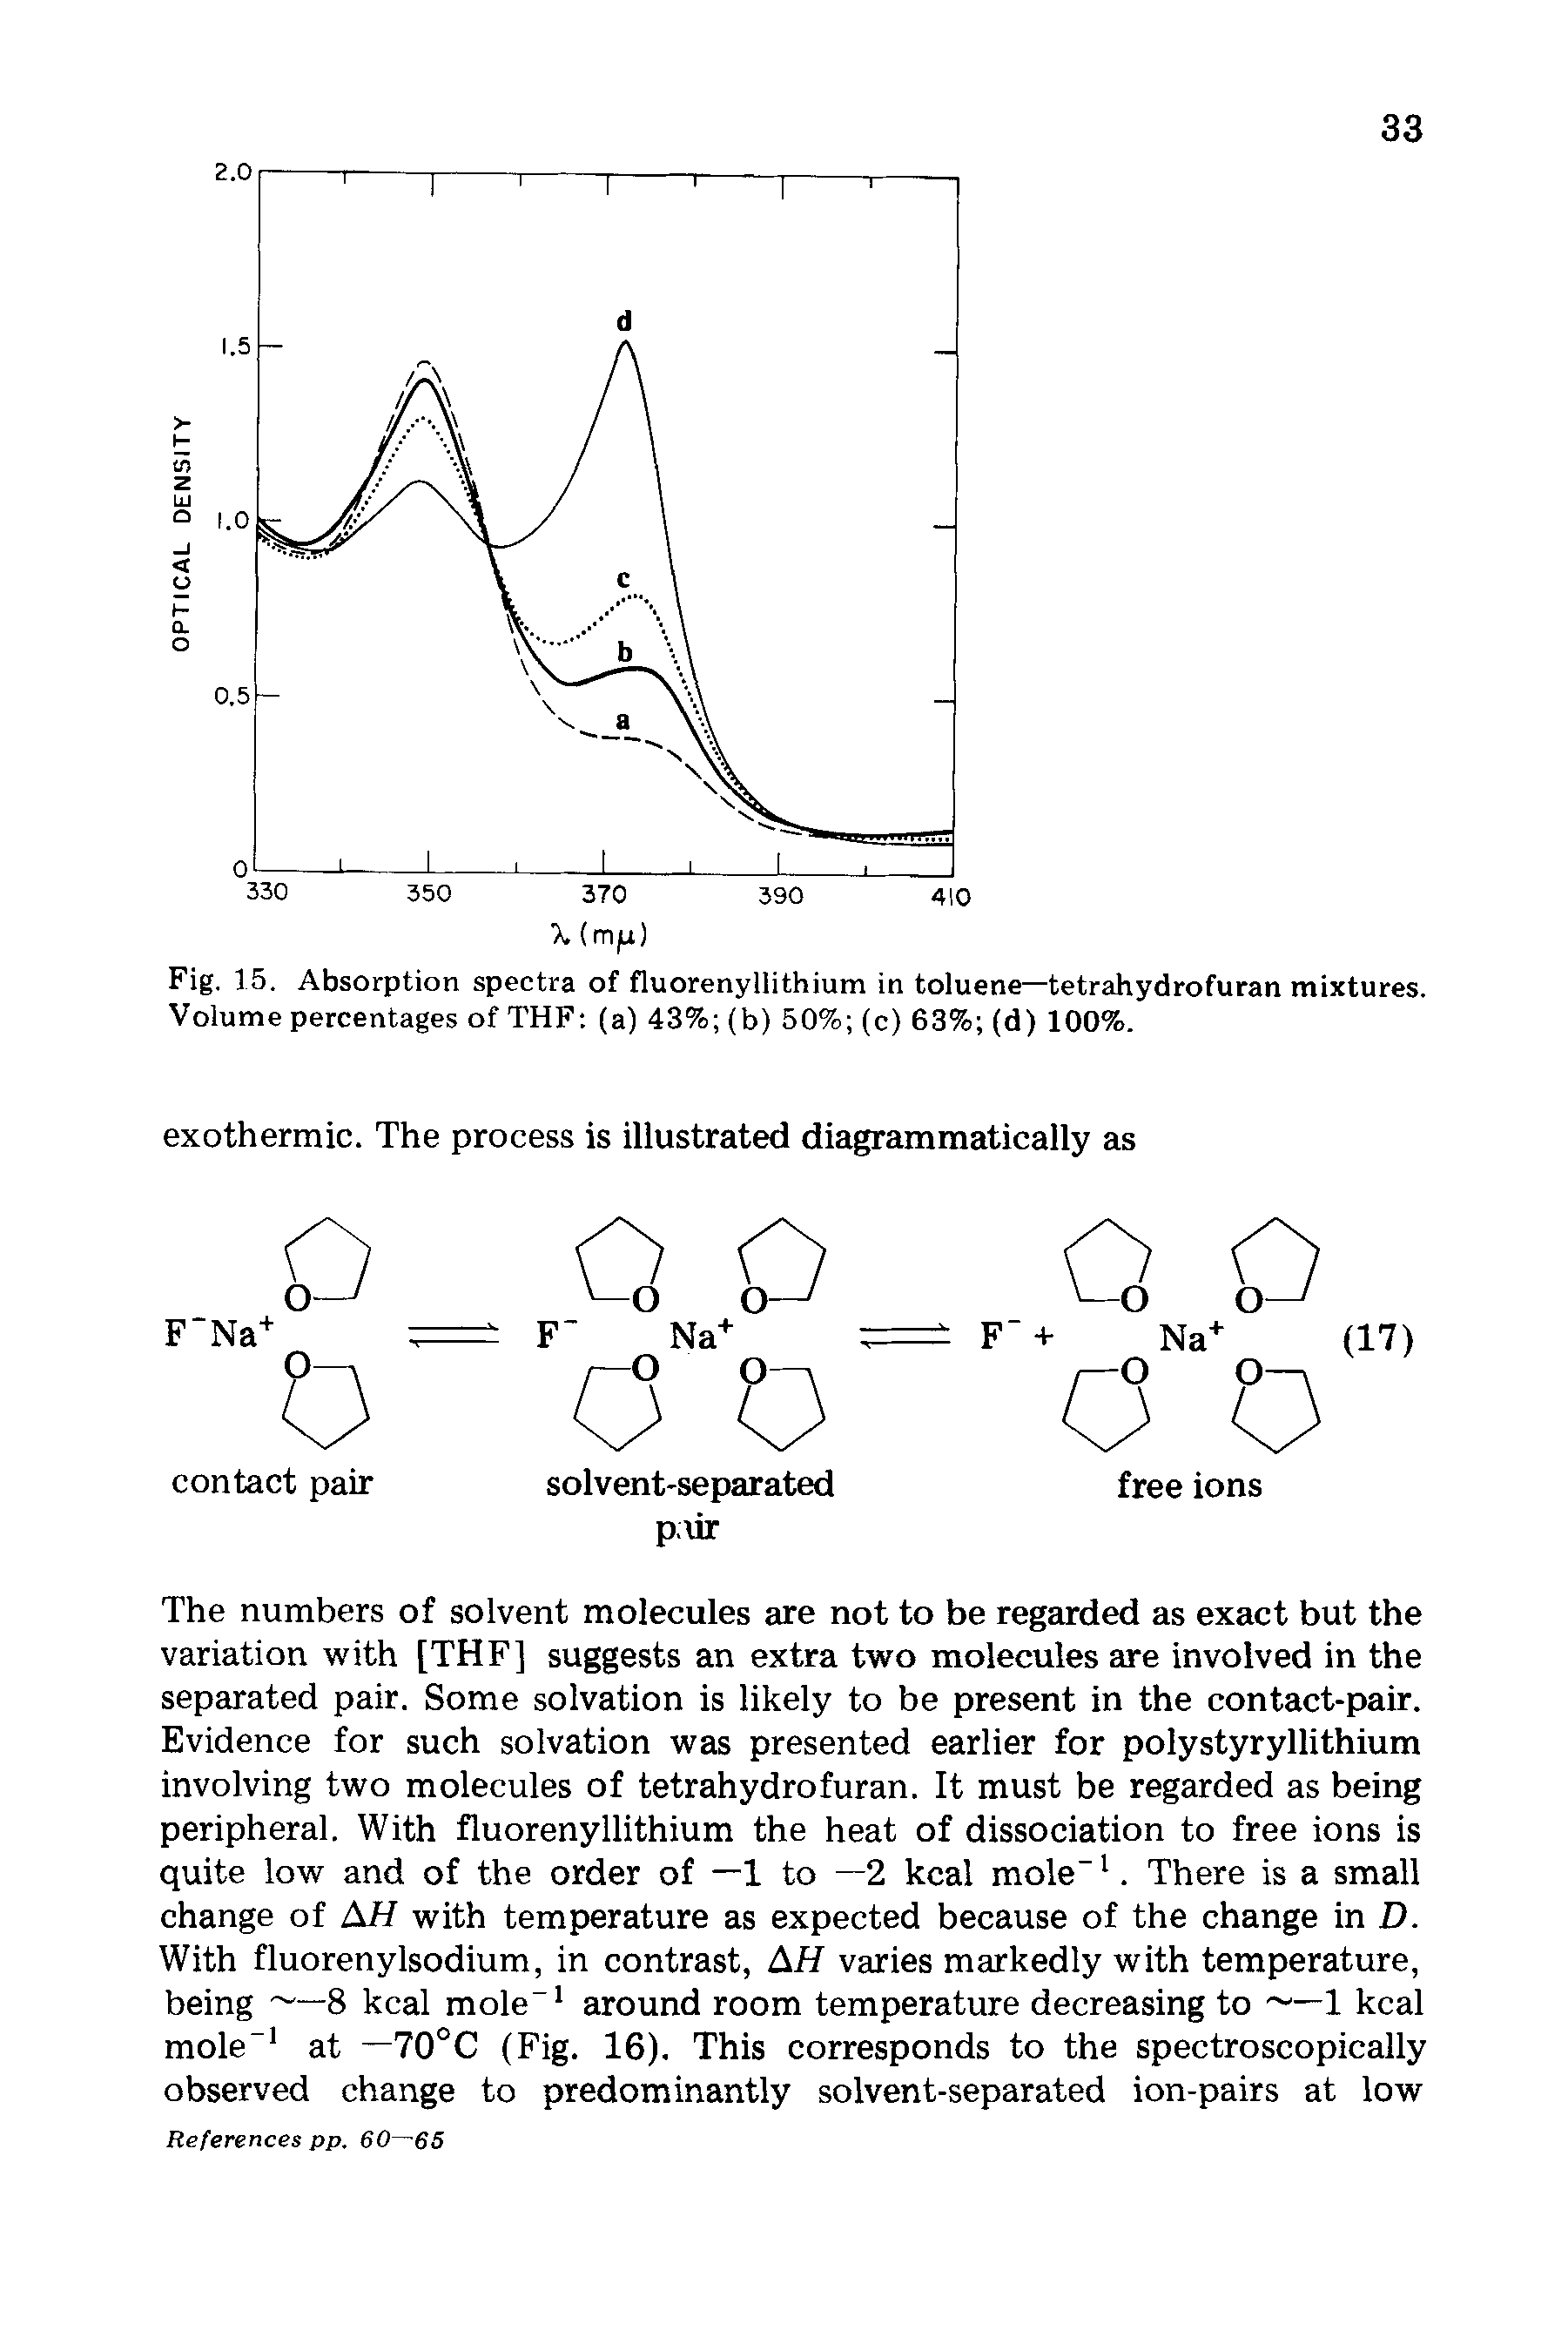 Fig. 15. Absorption spectra of fluorenyllithium in toluene—tetrahydrofuran mixtures. Volume percentages of THF (a) 43% (b) 50% (c) 63% (d) 100%.